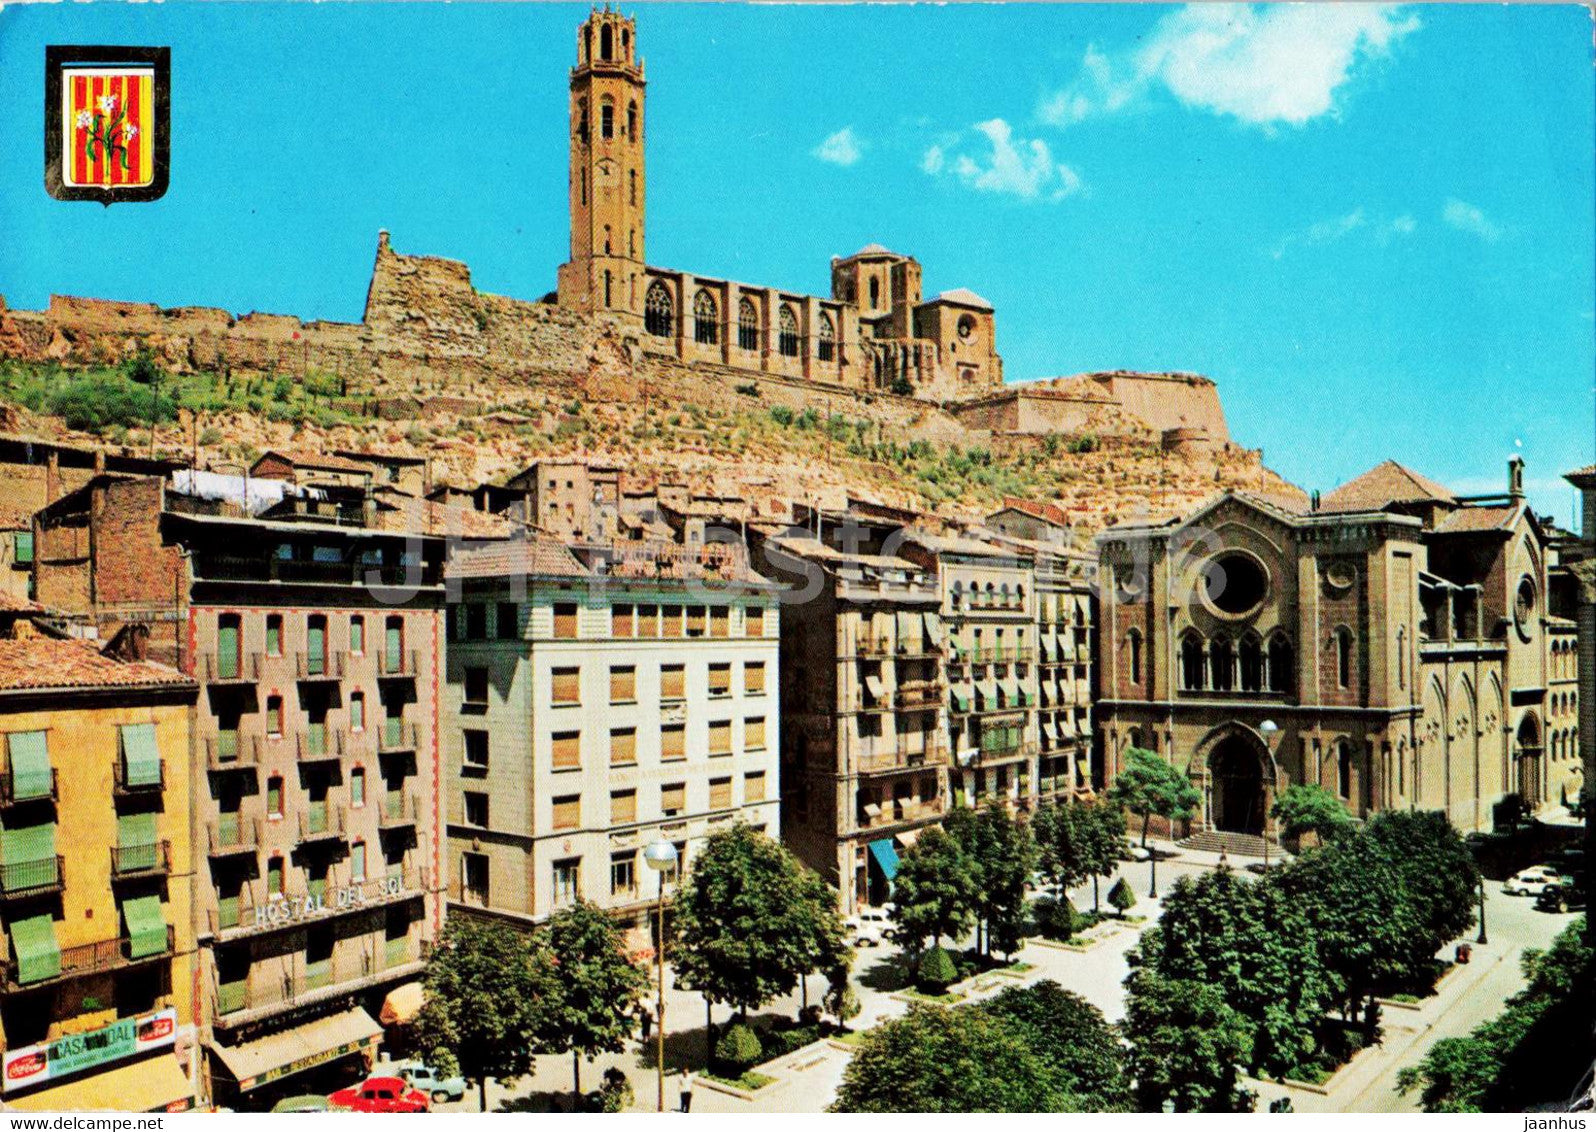 Lerida - Plaza de Espana y Seo Antigua - Spain square and Antique Cathedral - 391 - 1965 - Spain - used - JH Postcards